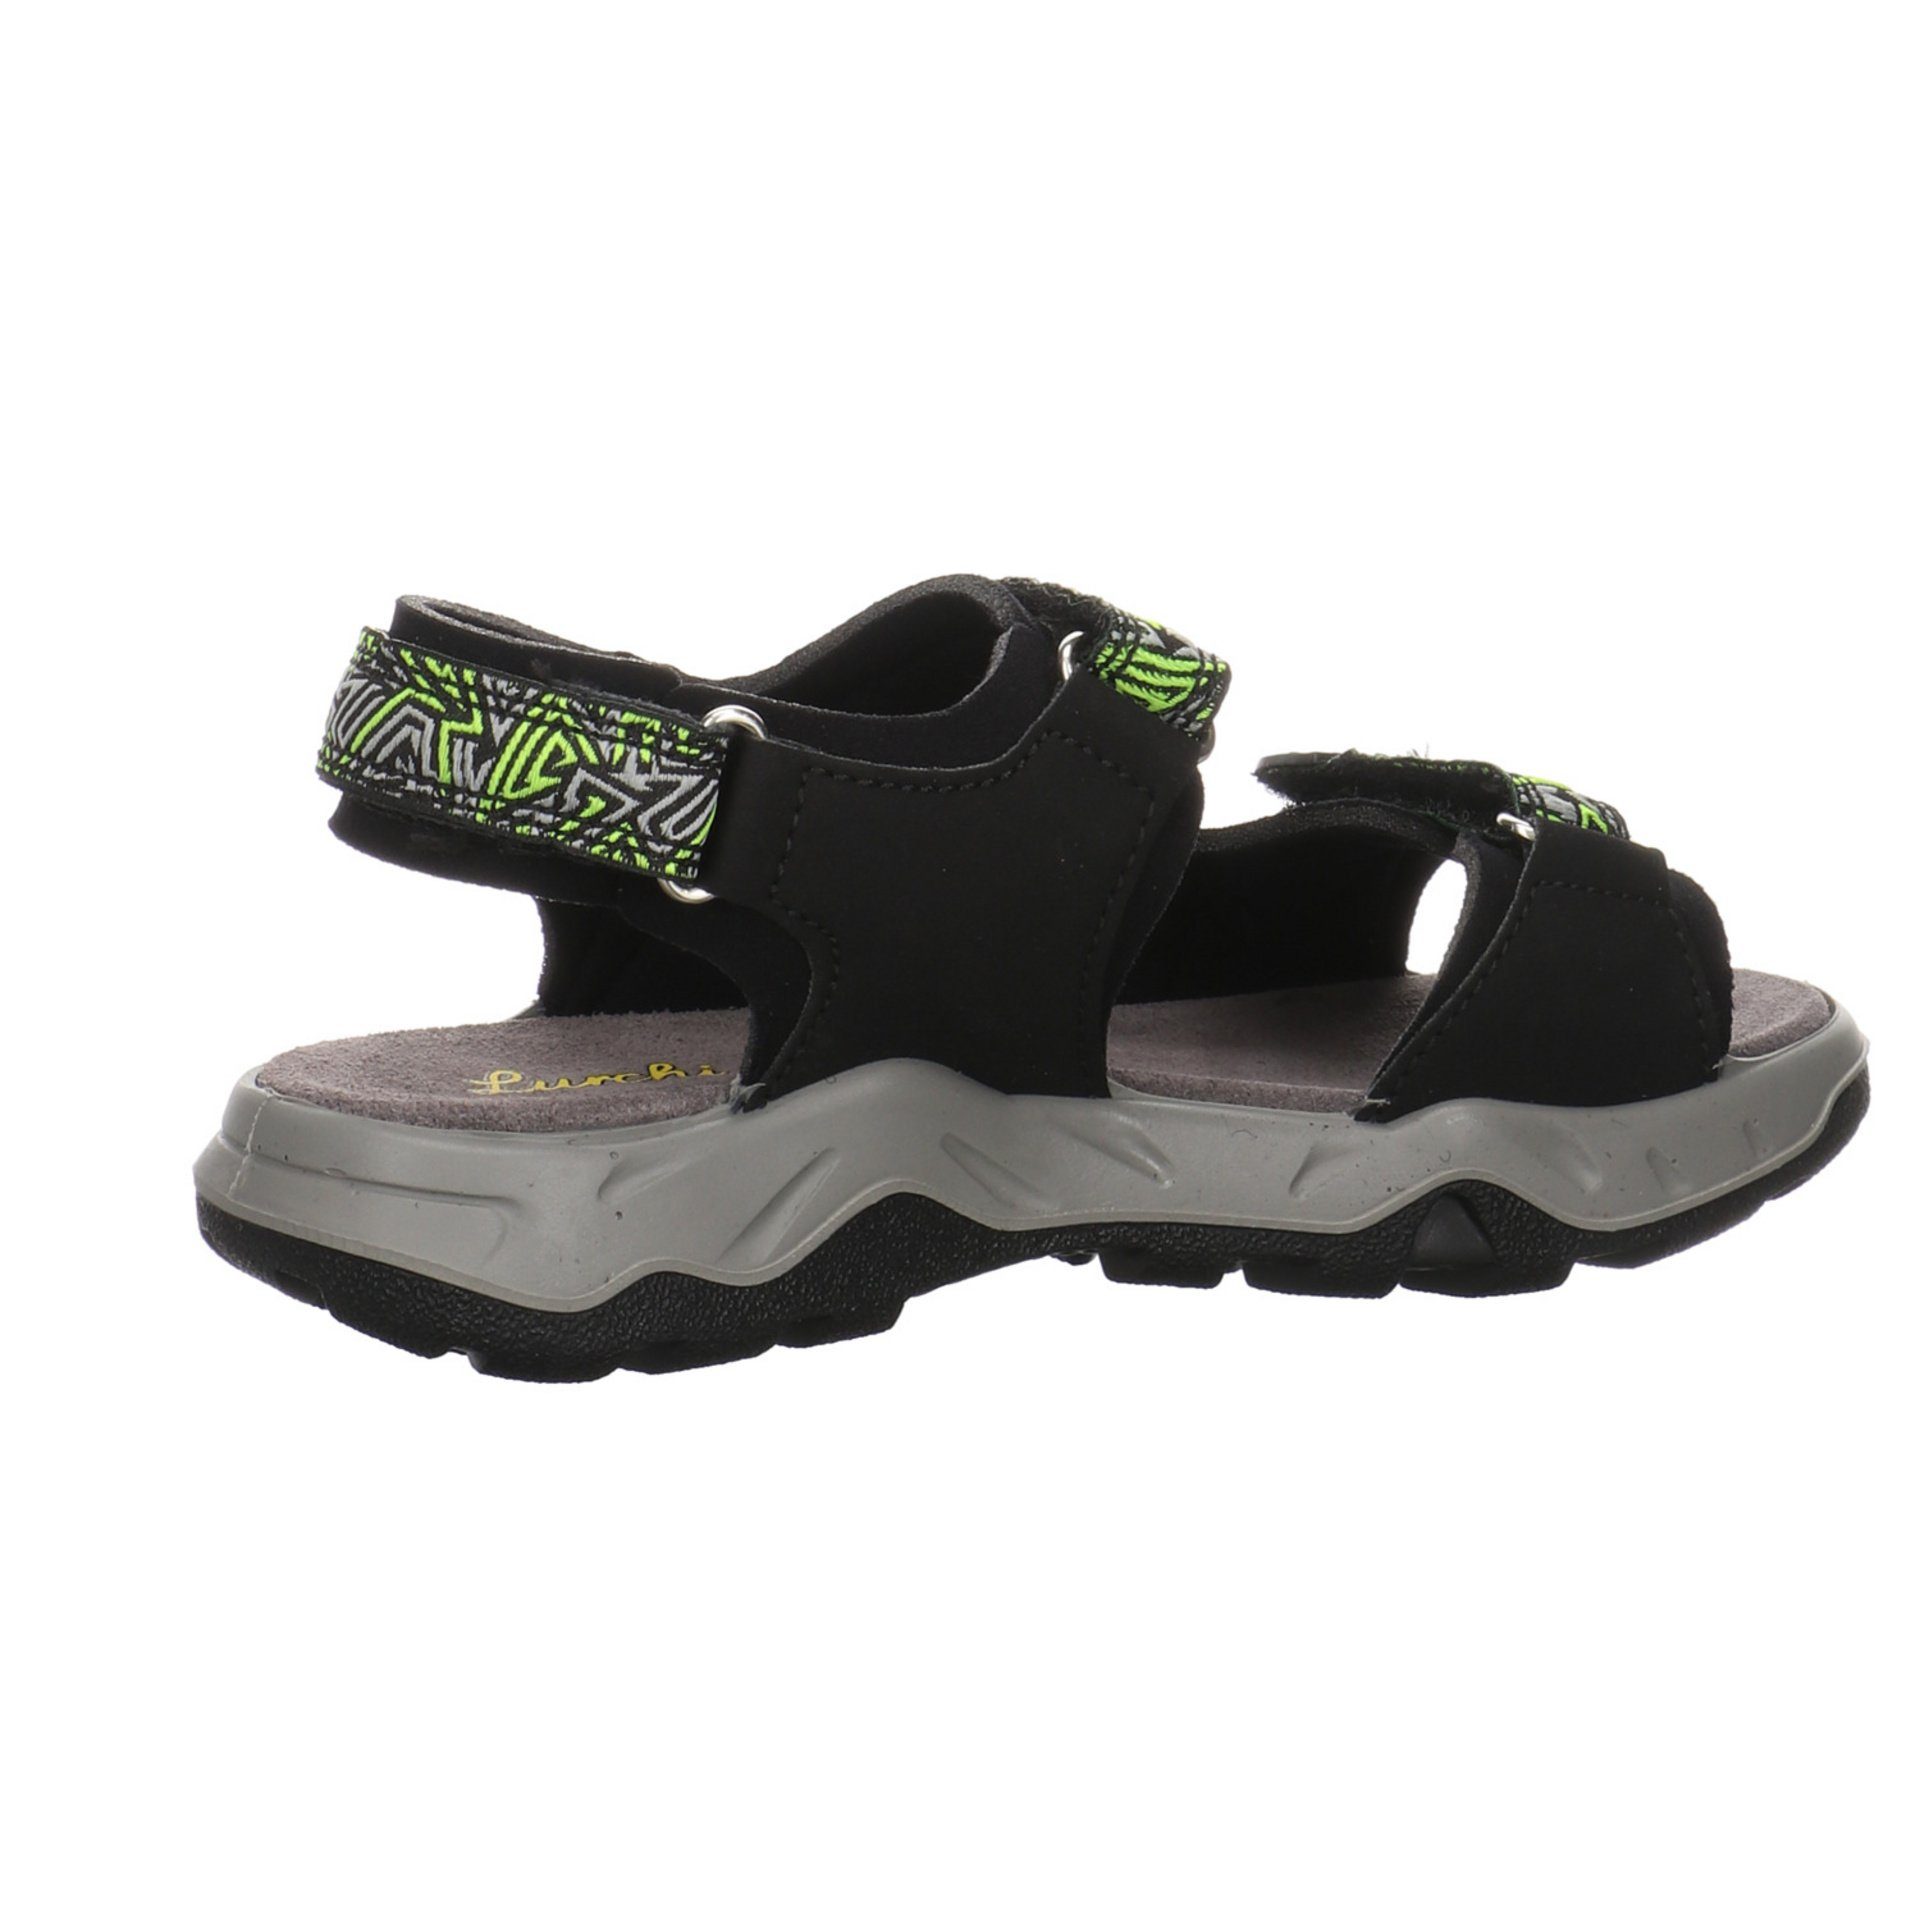 Salamander Lurchi Multi Sandalen Sandale Sandale Synthetikkombination Jungen Schuhe Kinderschuhe Black Odono